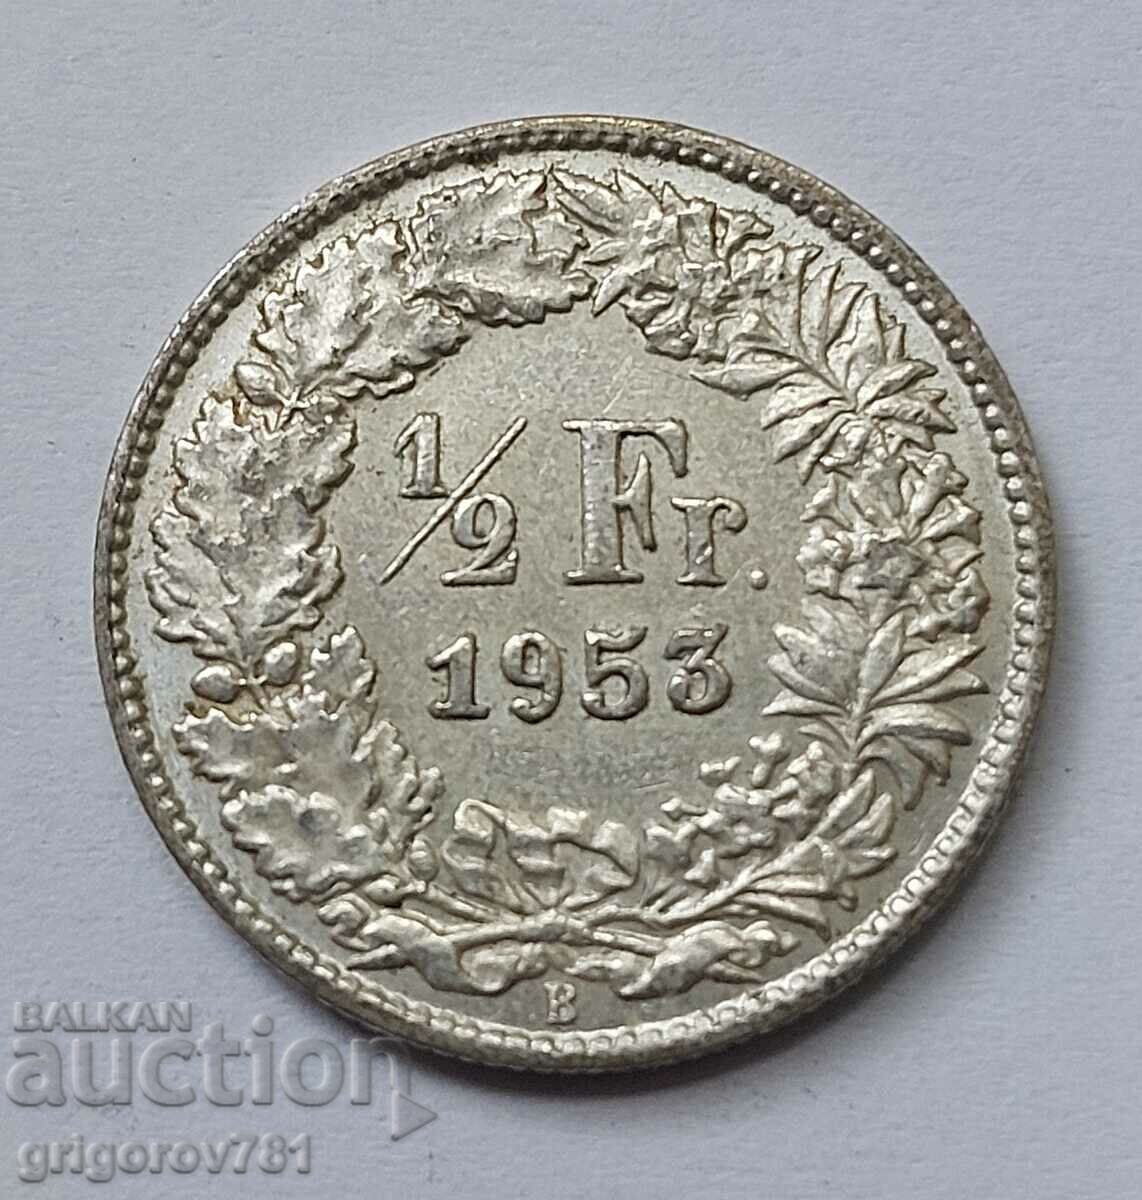 1/2 Franc Silver Switzerland 1953 B - Silver Coin #163